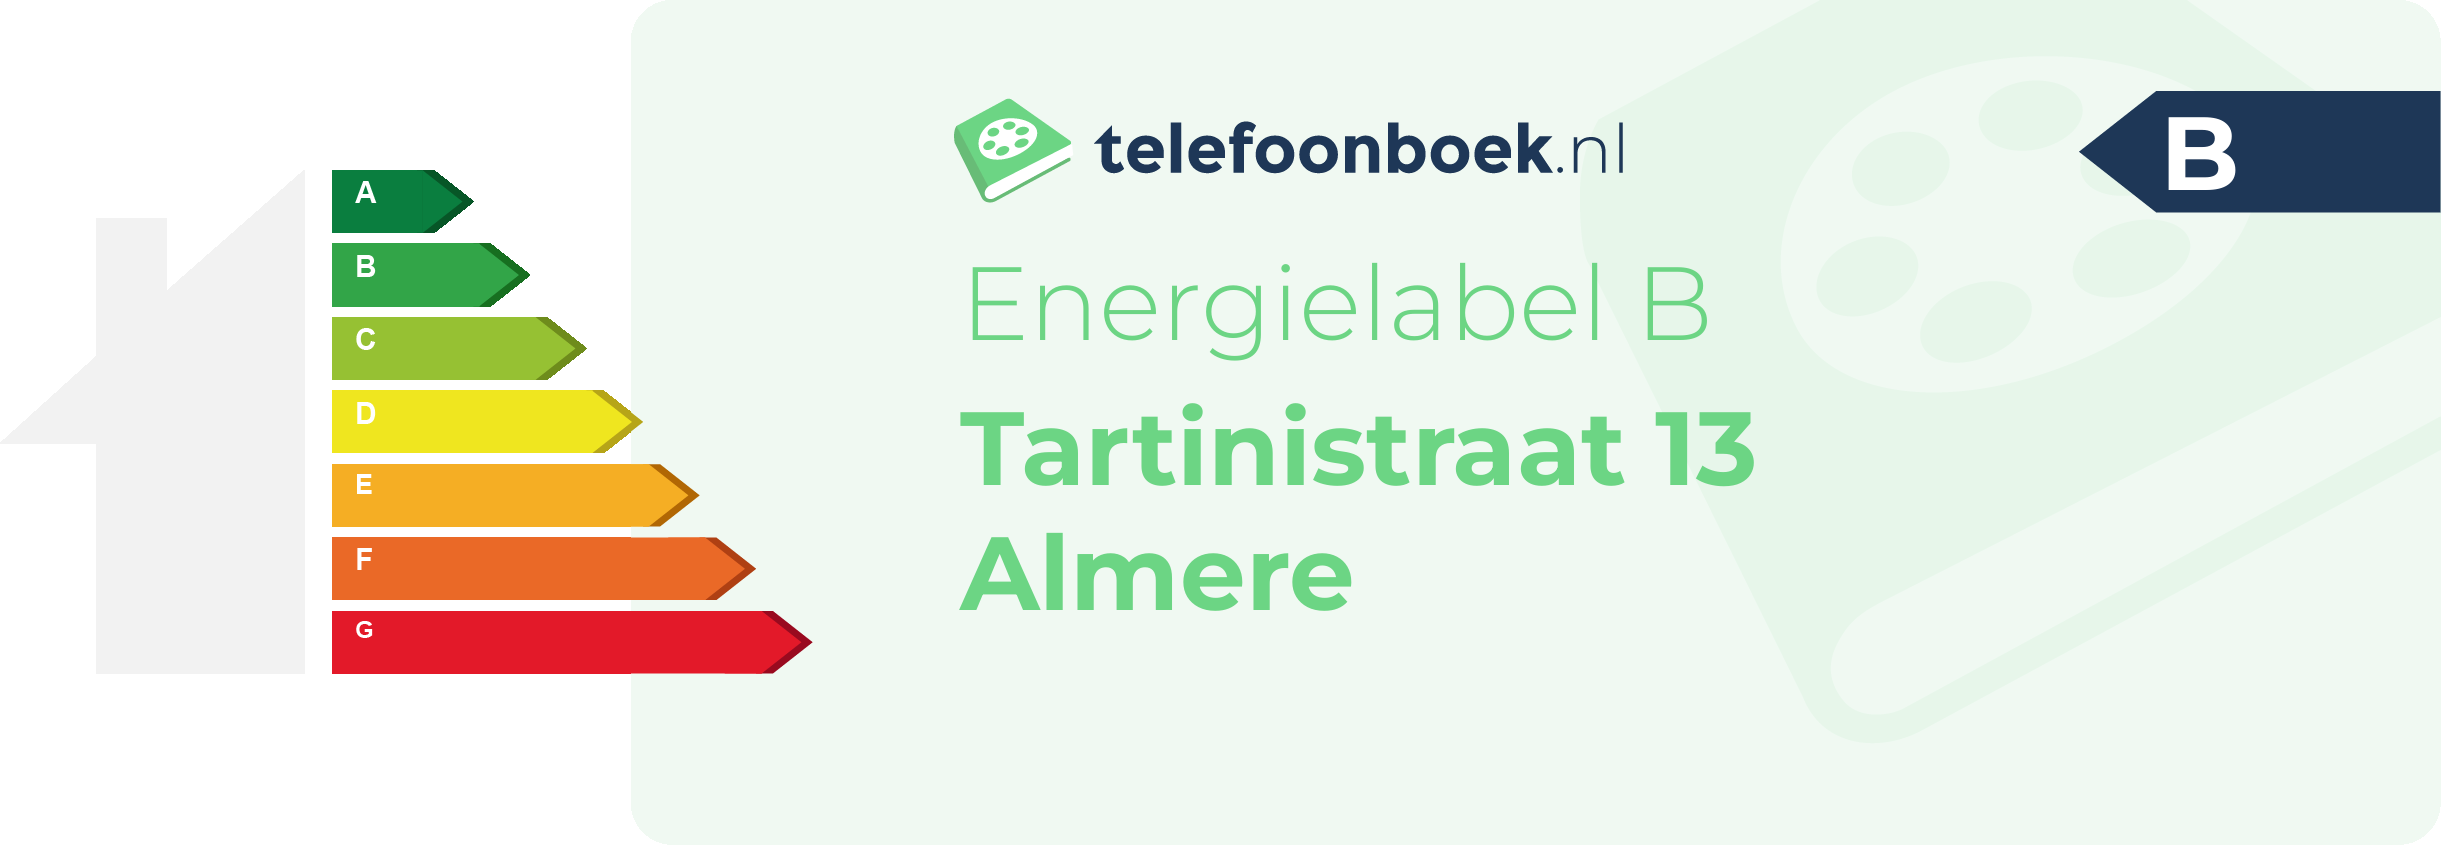 Energielabel Tartinistraat 13 Almere